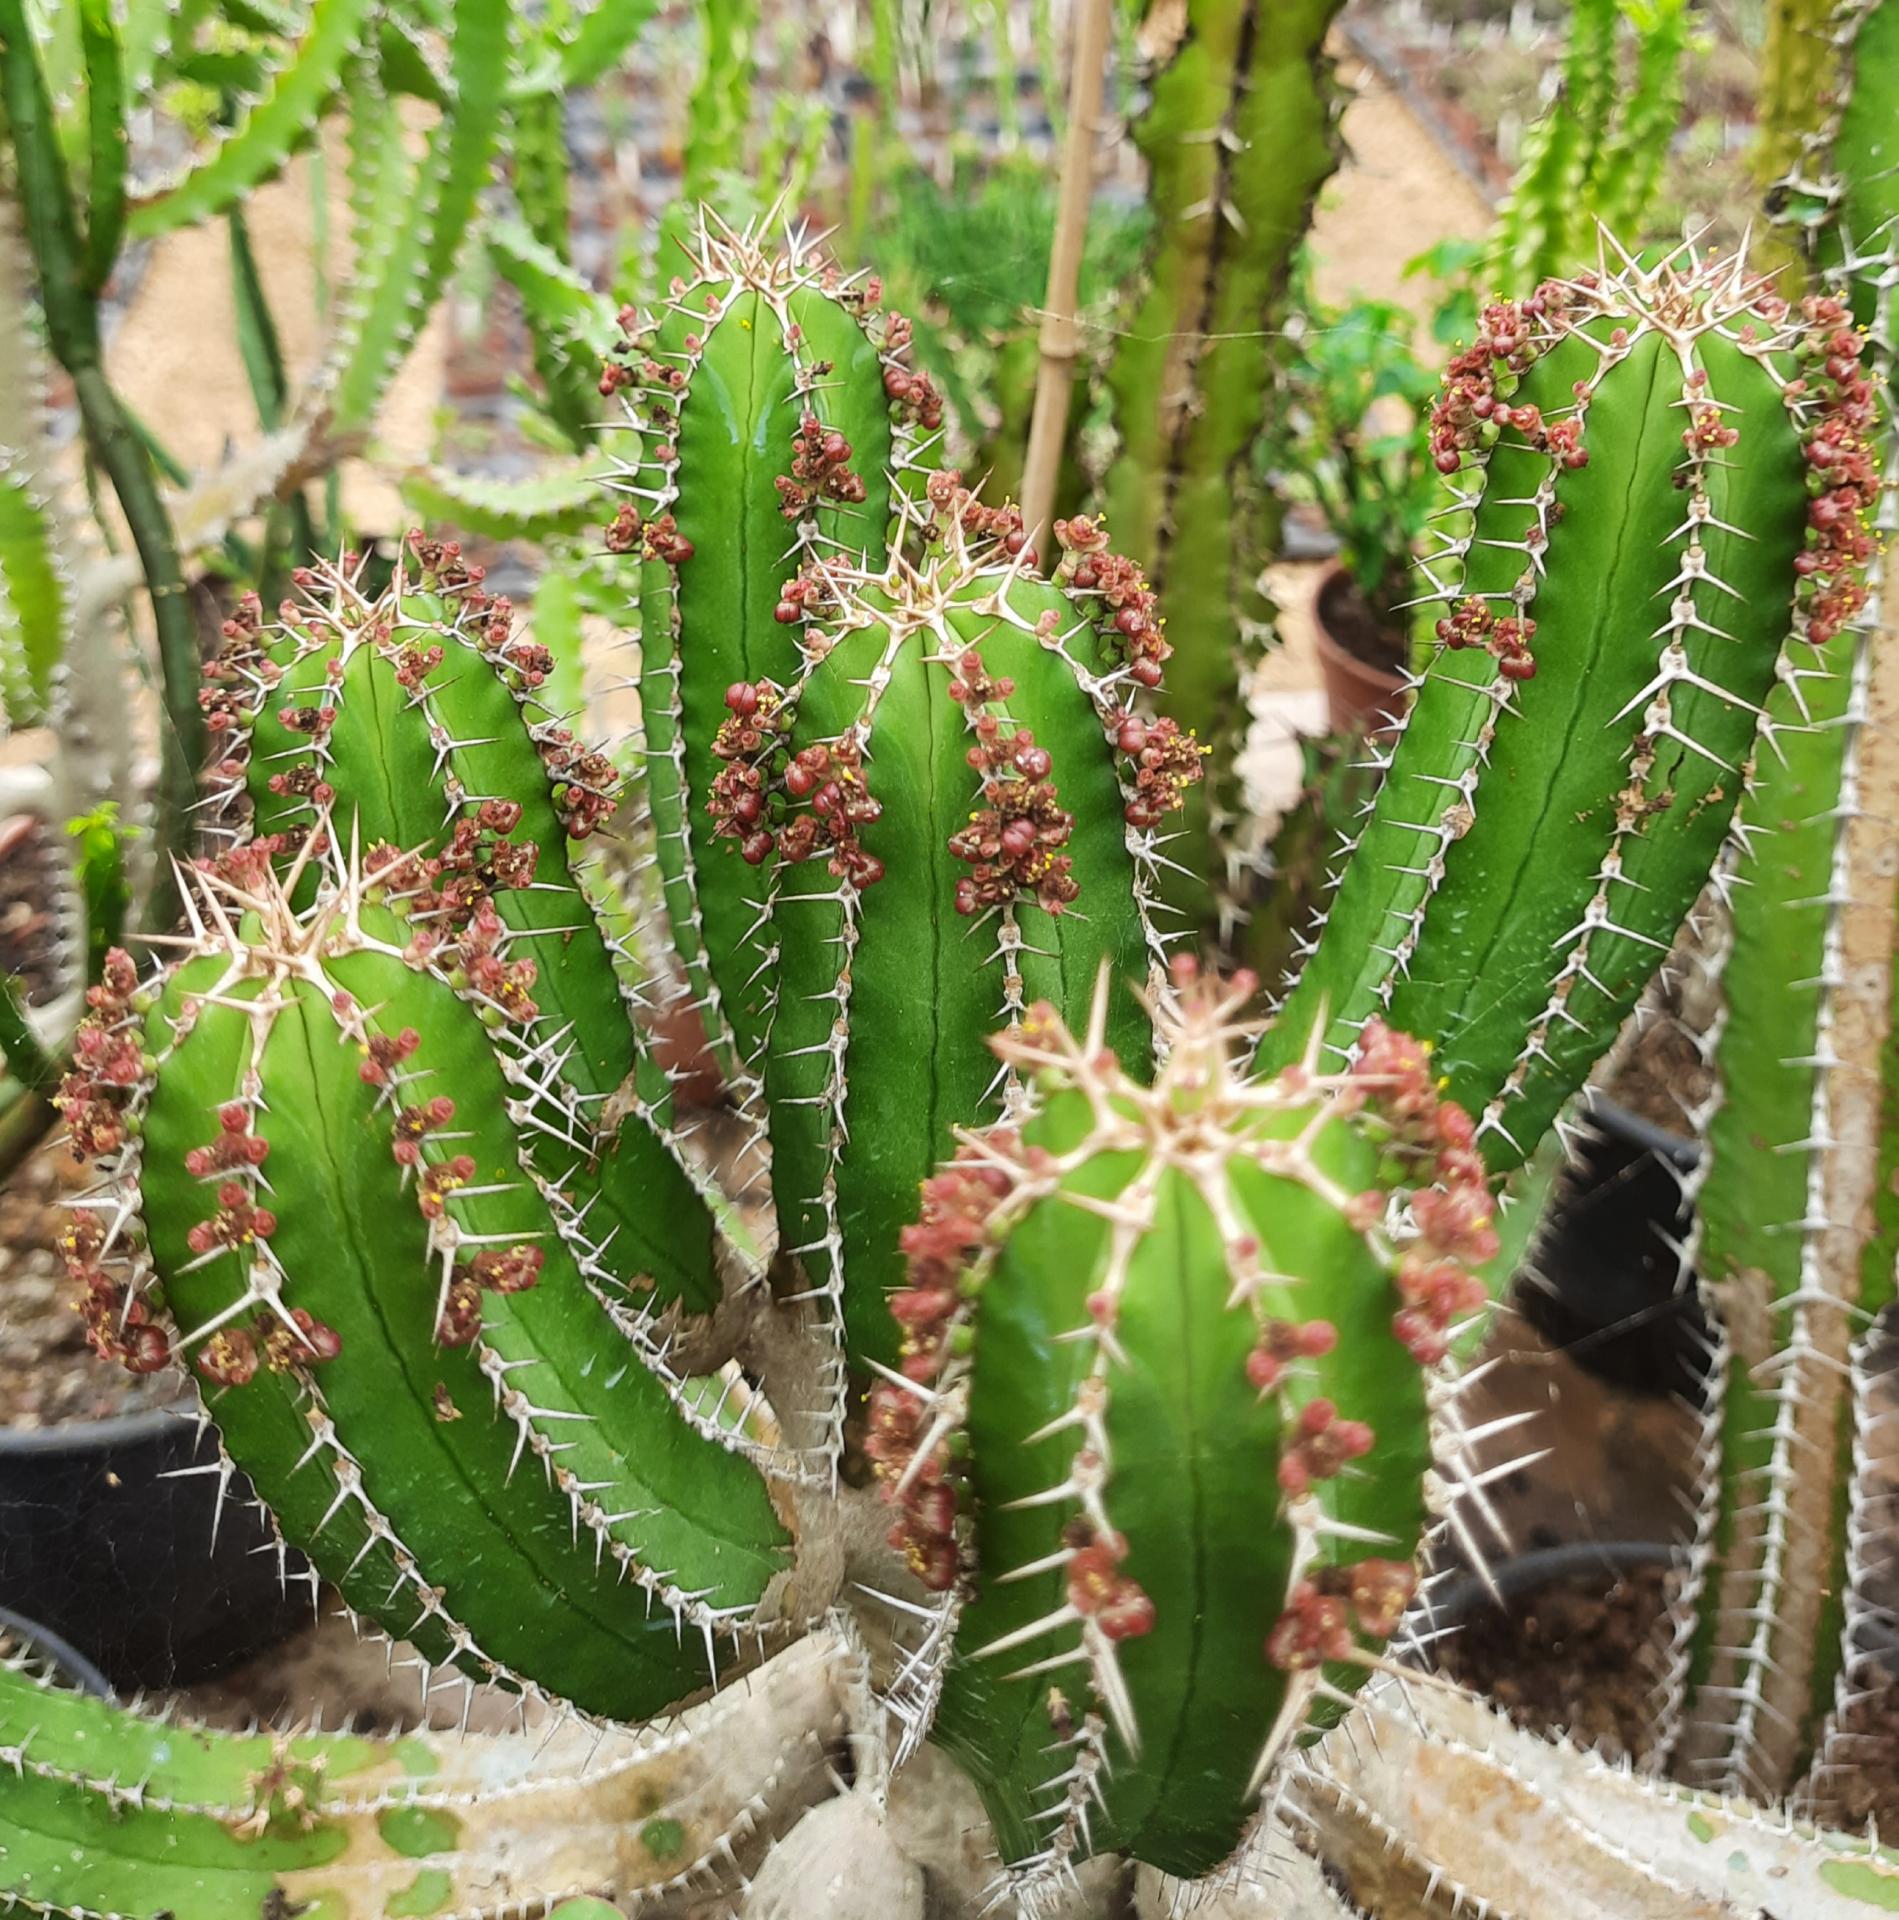 Euphorbia echinus